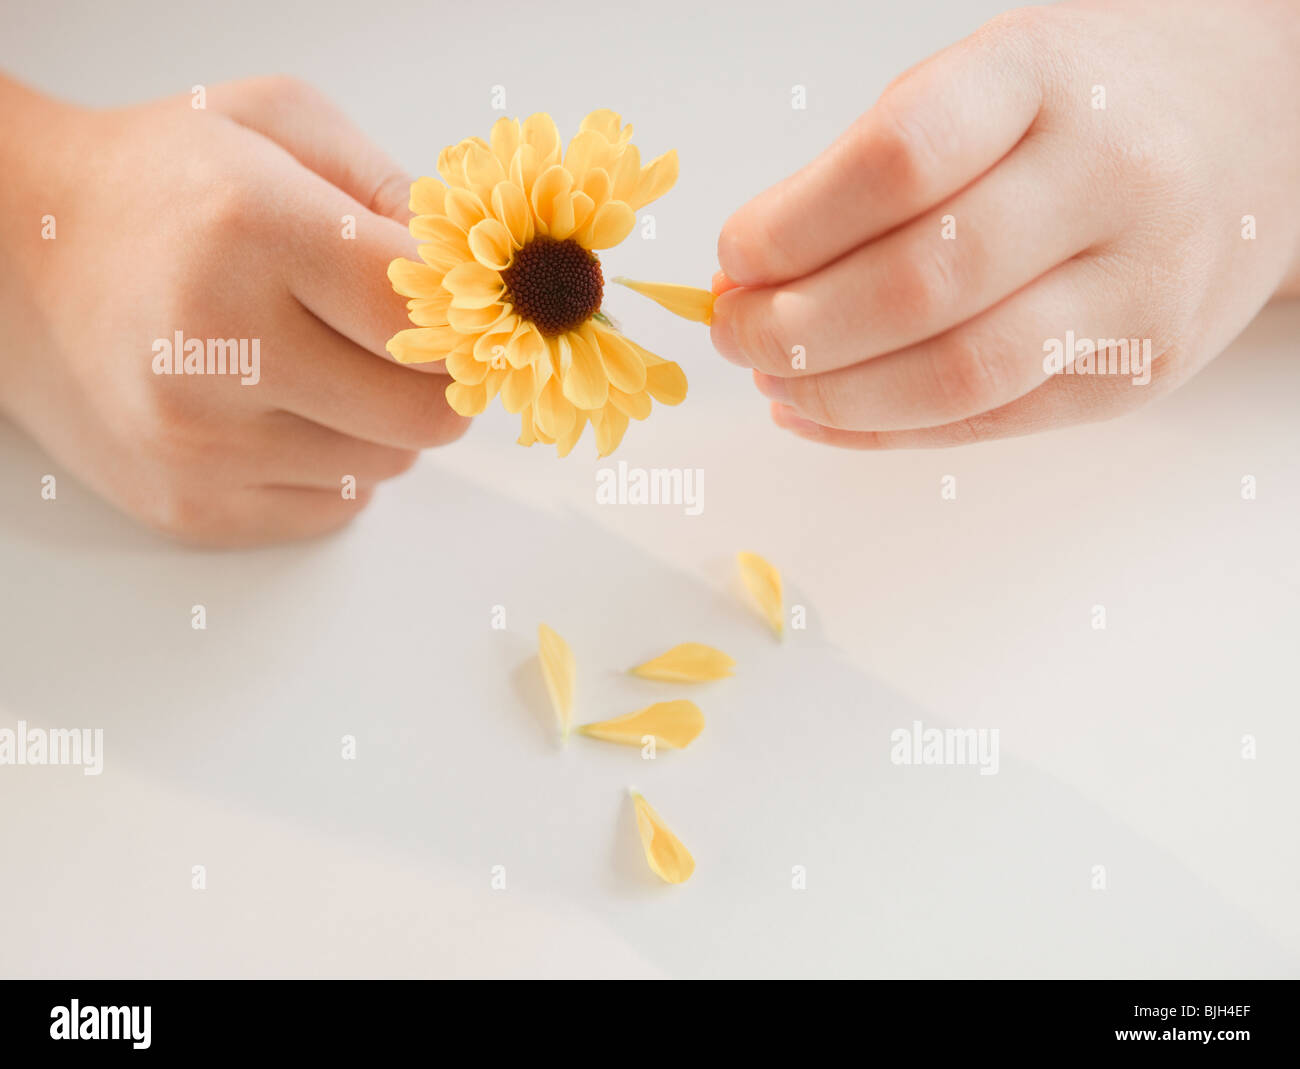 Hands pulling petals off flower Stock Photo